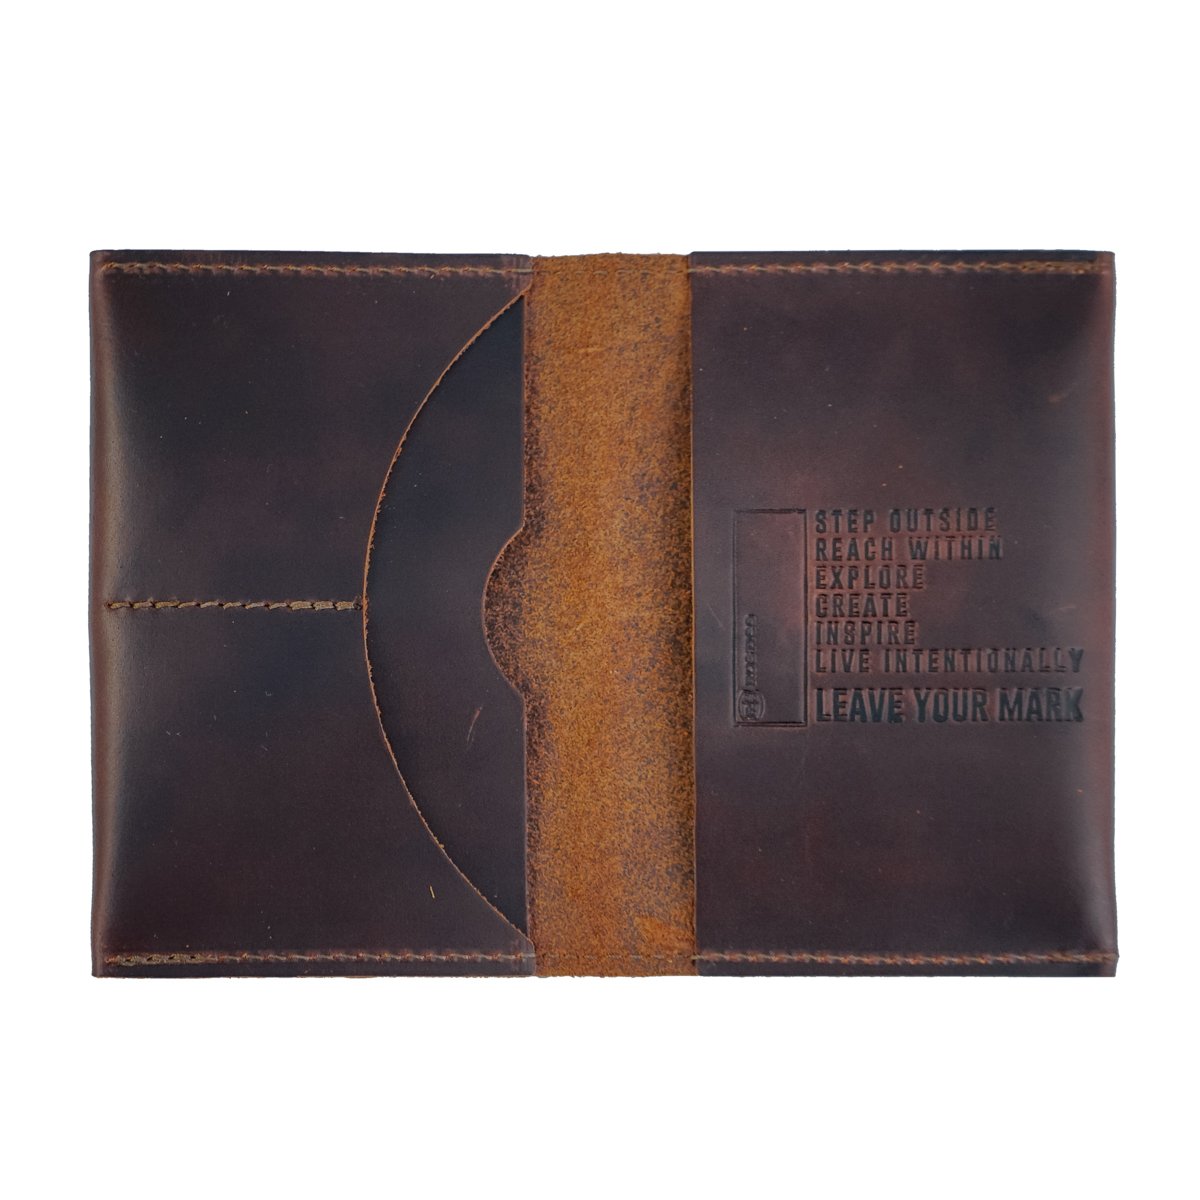 Handmade Passport Travel Wallet Waterproof Discreet Hidden - Porteen Gear